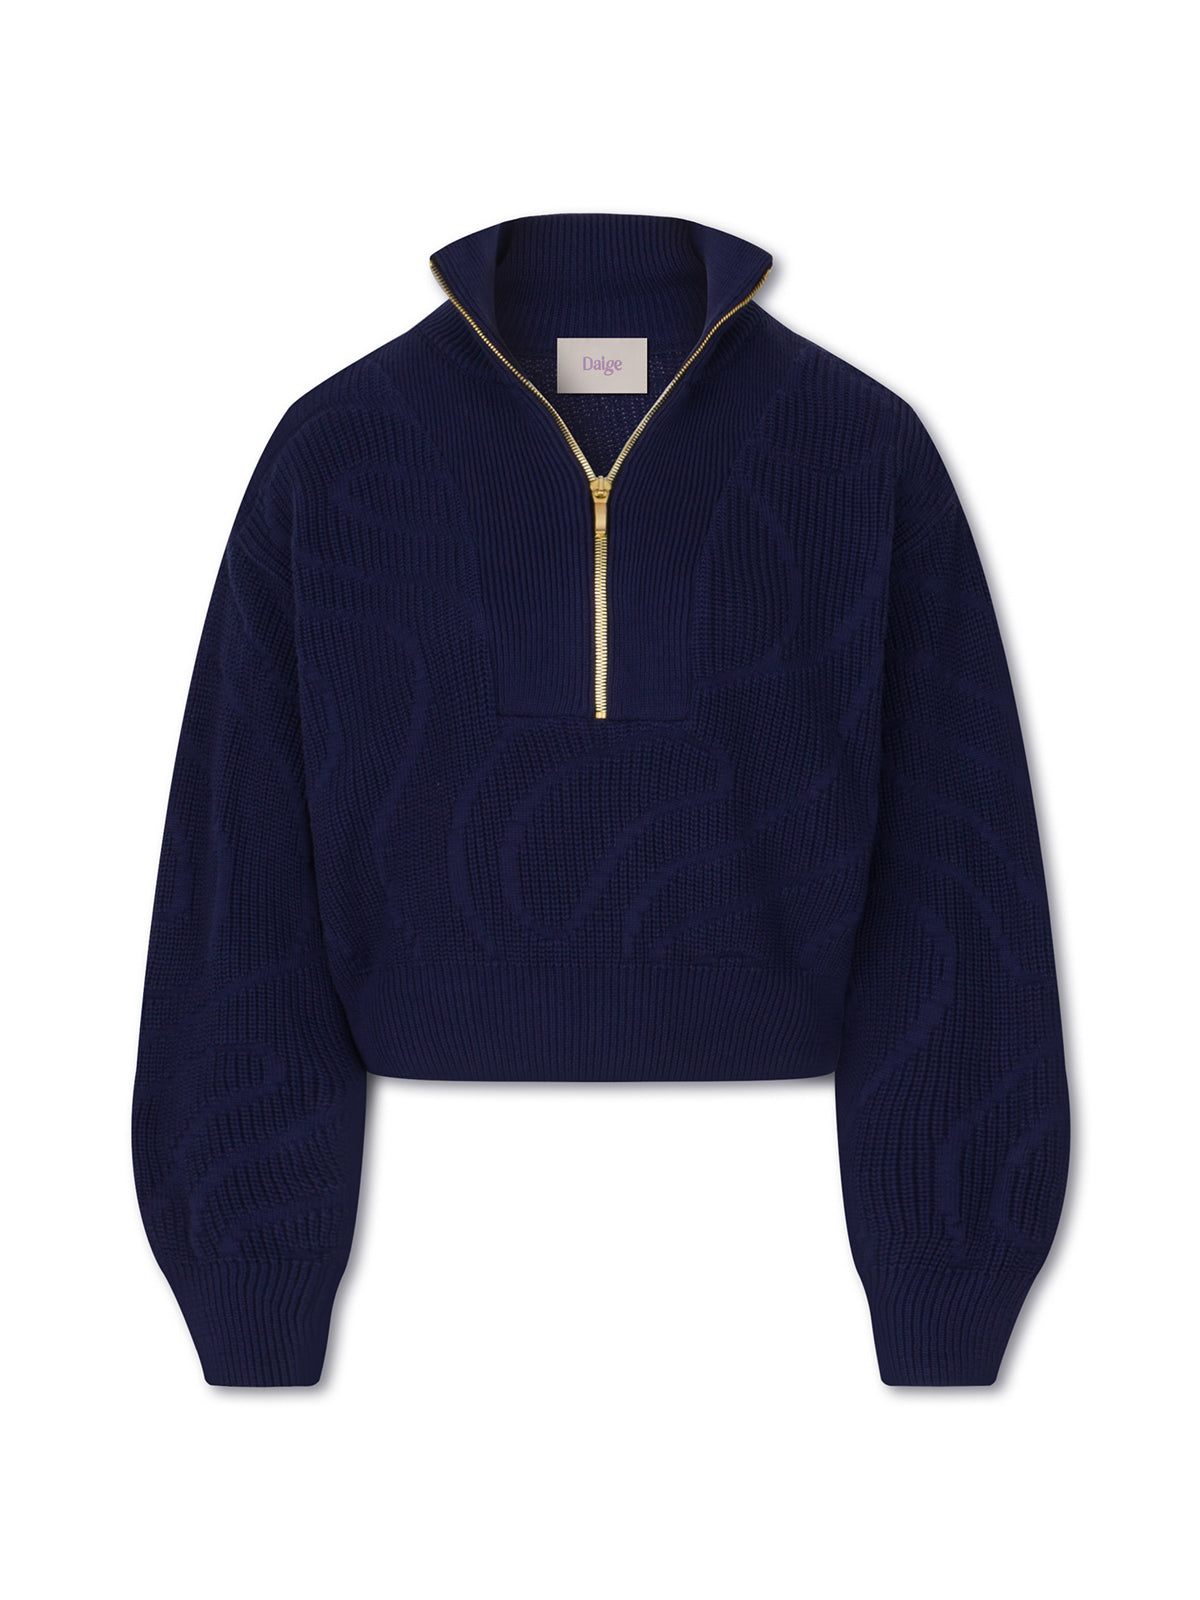 RIPPLE knit sweater - navy